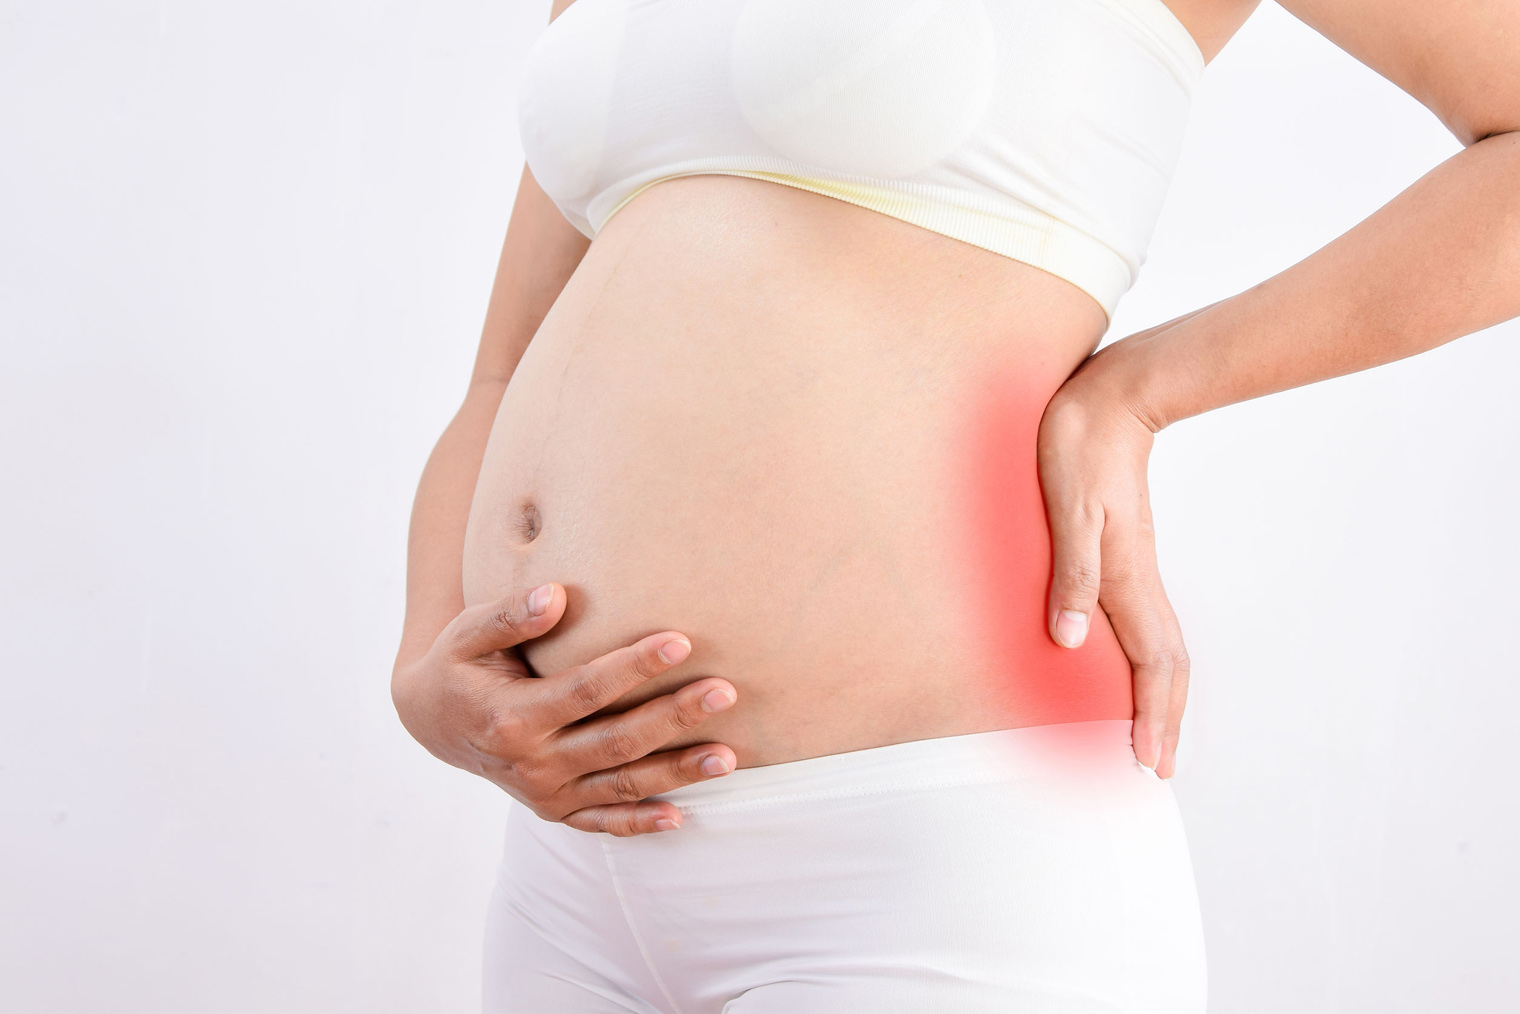 nervio ciático mujer embarazada